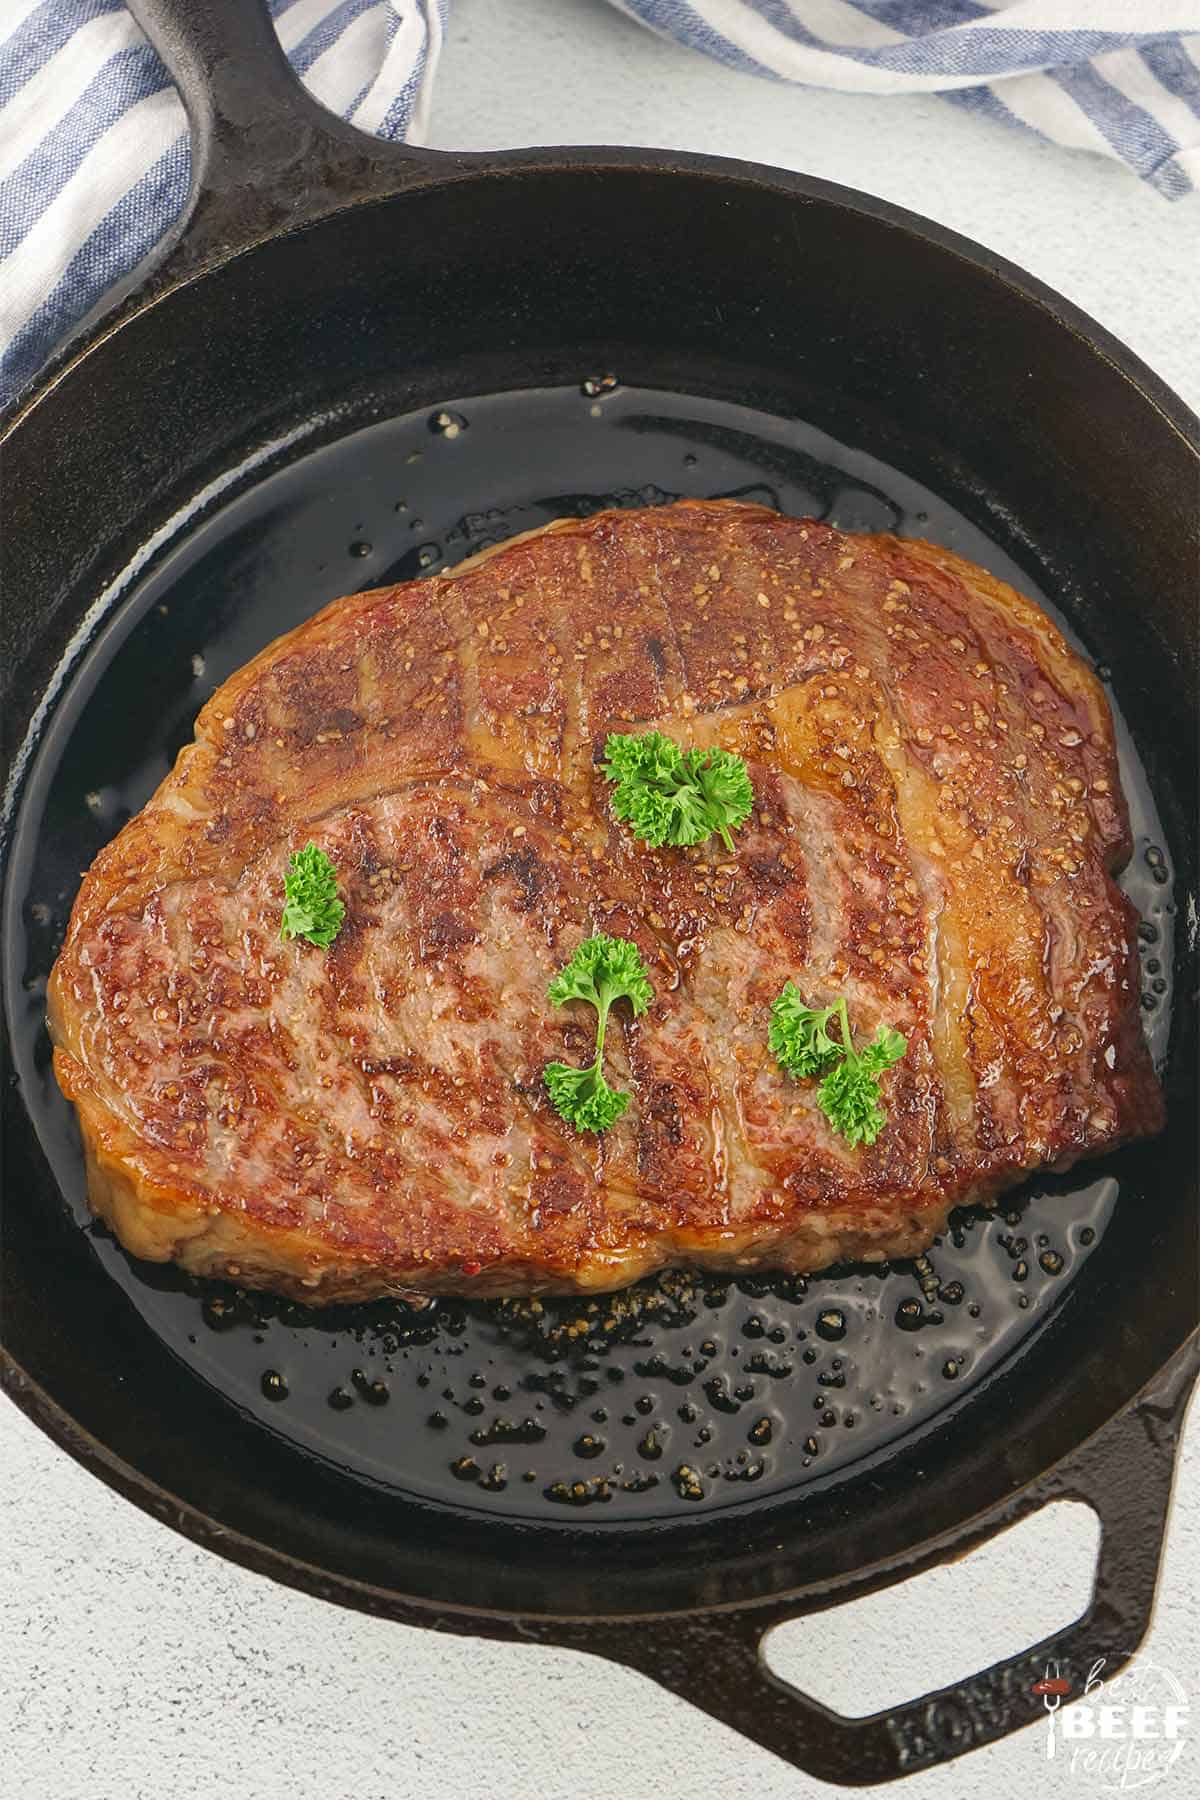 smoked wagyu steak in a skillet